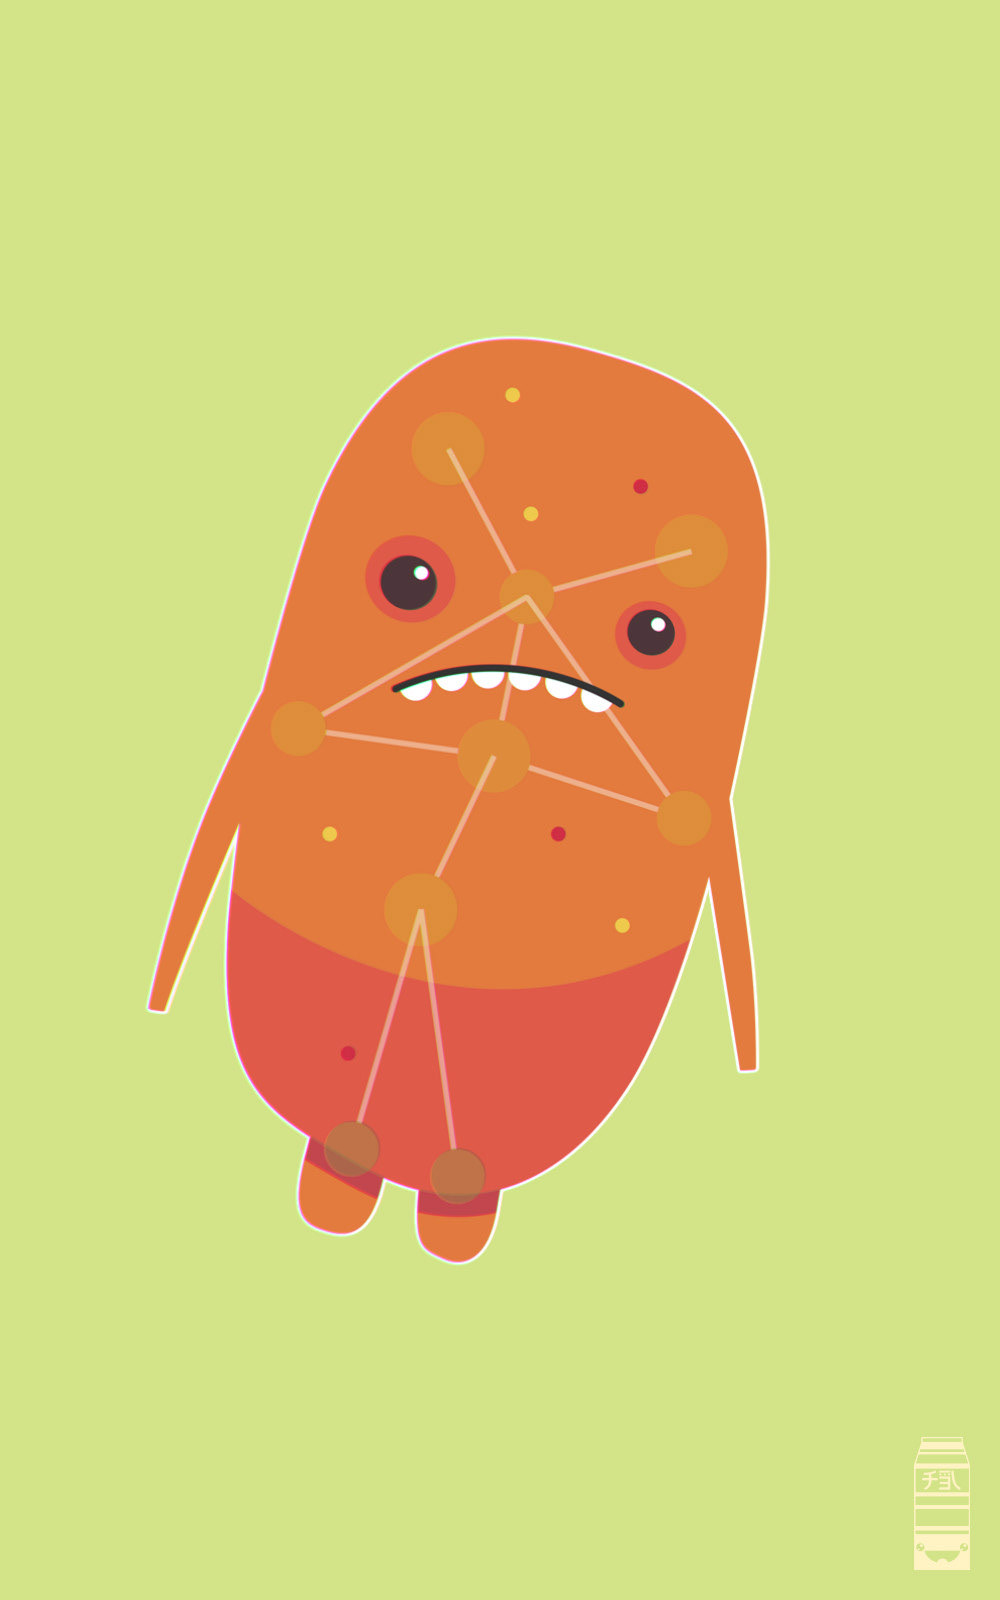 Adobe Portfolio campy command 2D germs Bacteria stylised Fun cartoon